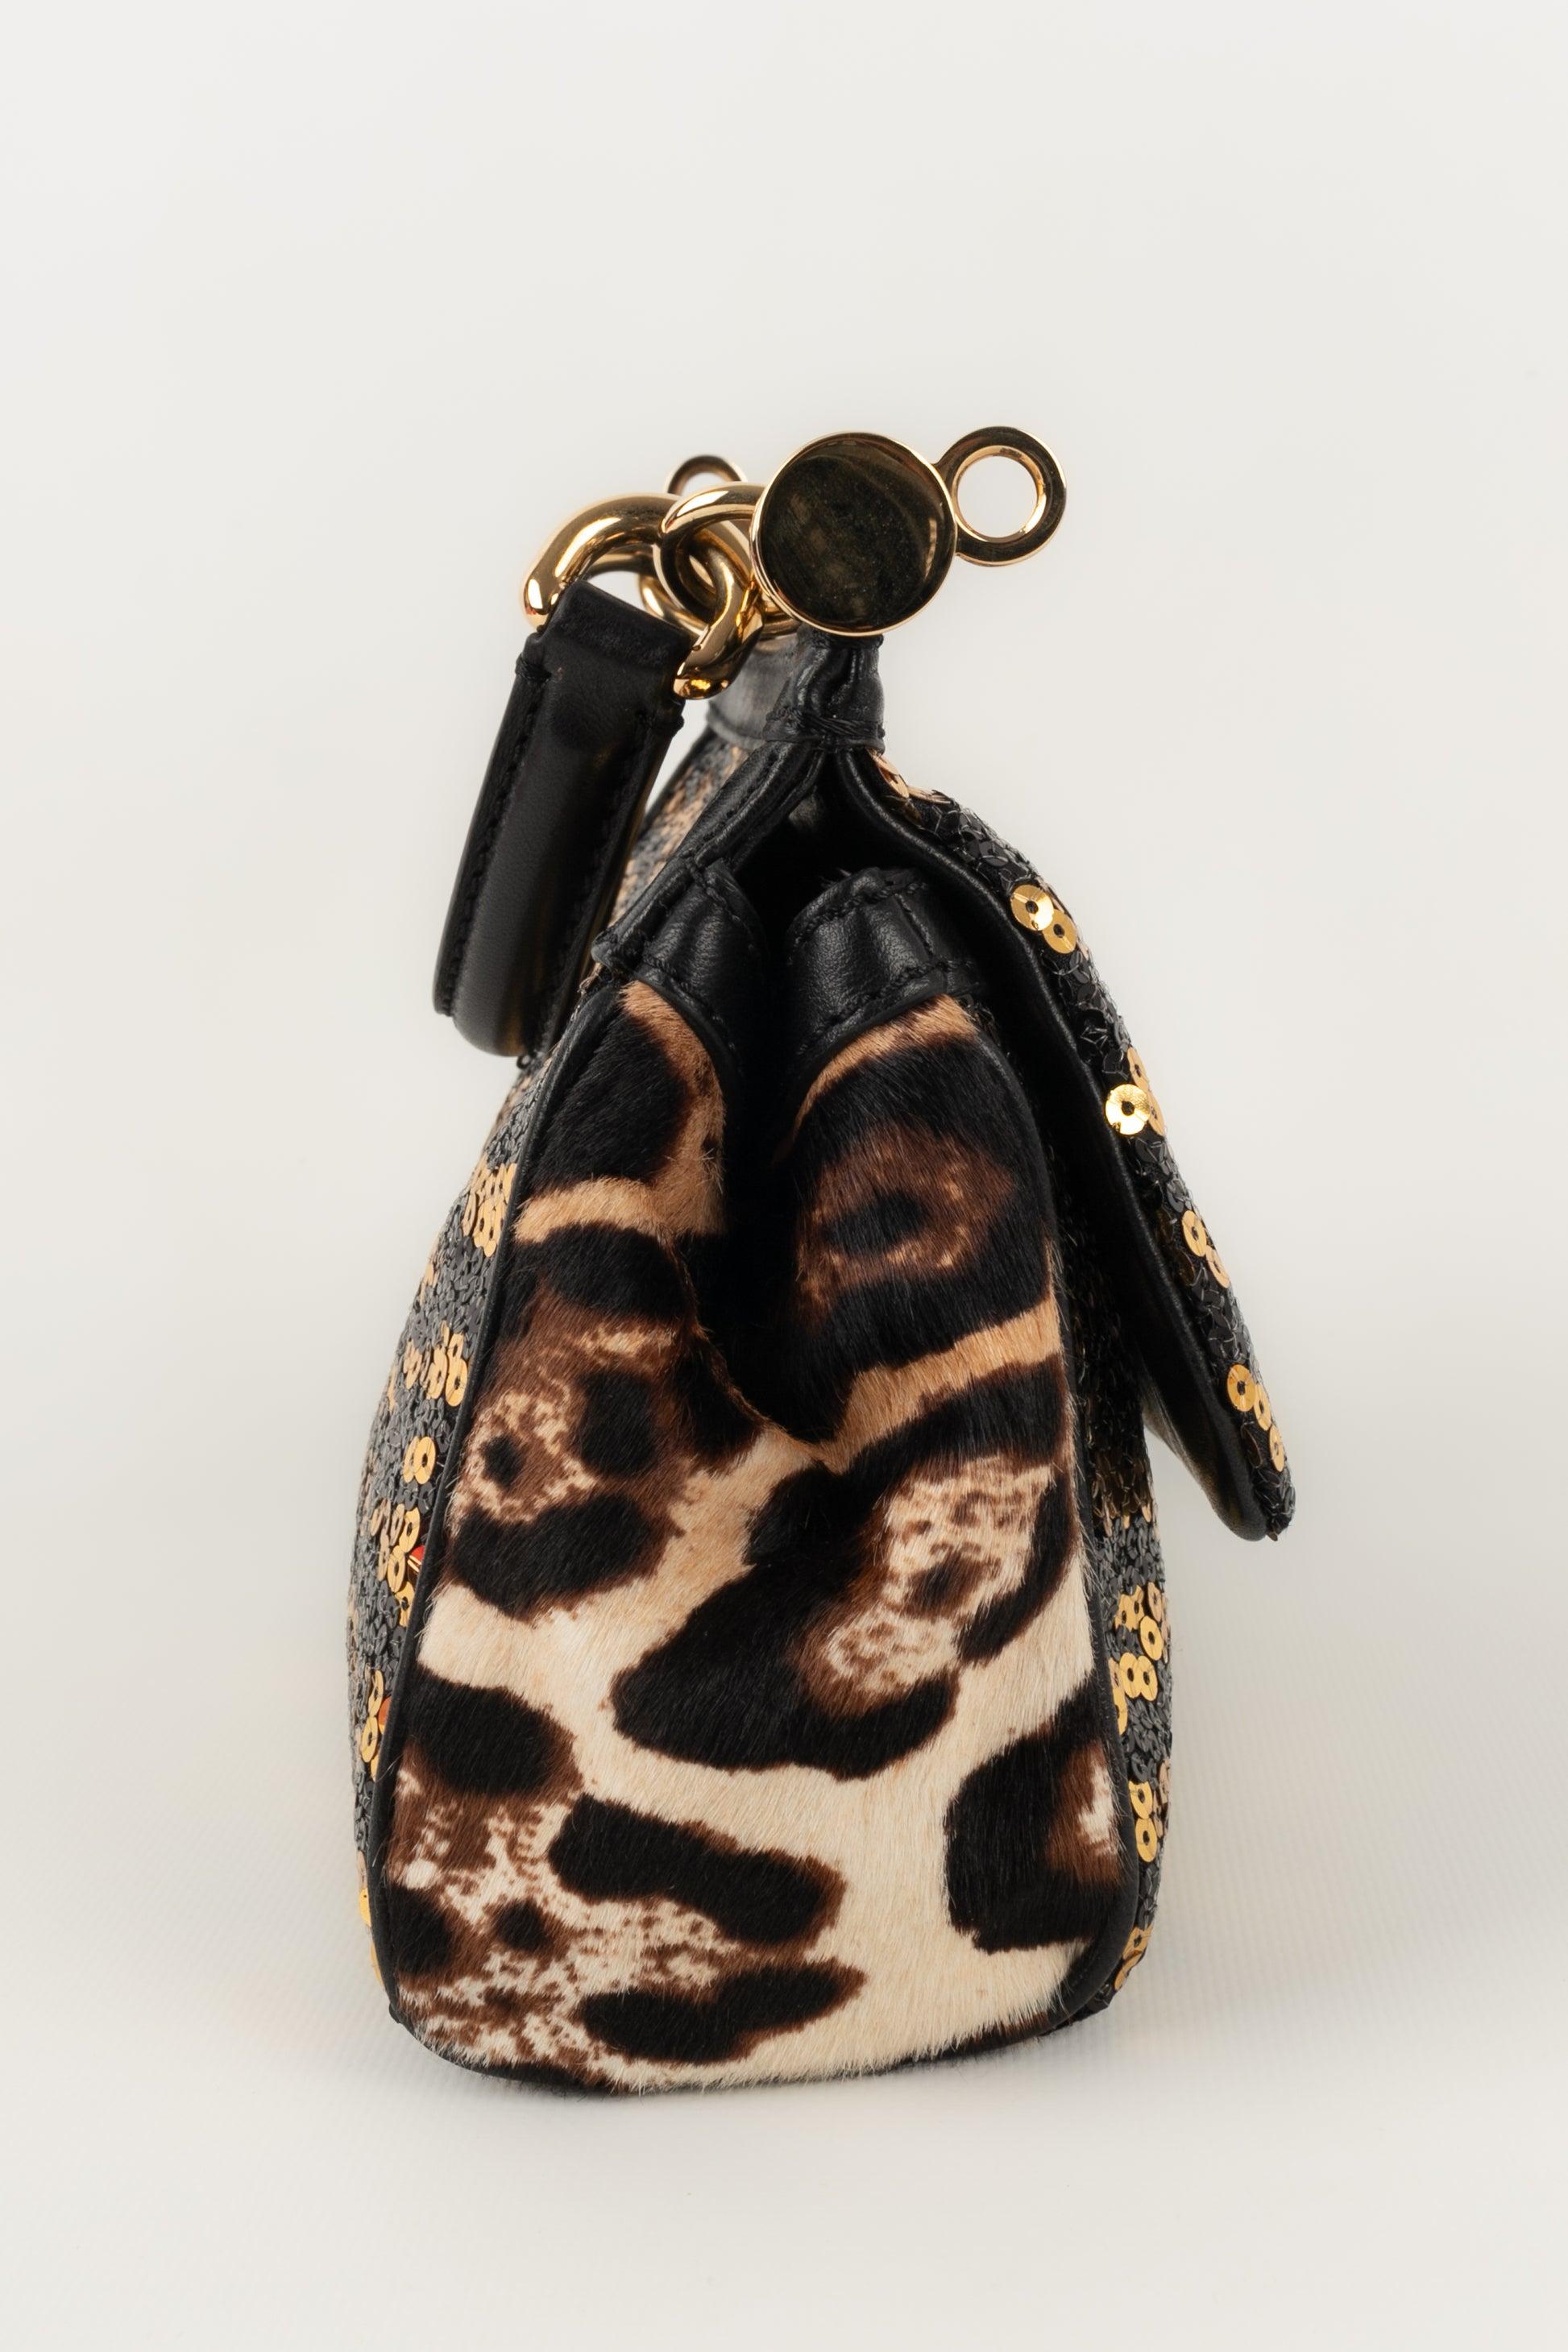 Dolce & Gabbana Black Foal Skin Sicily Bag with Sequins & Golden Metal Elements For Sale 1